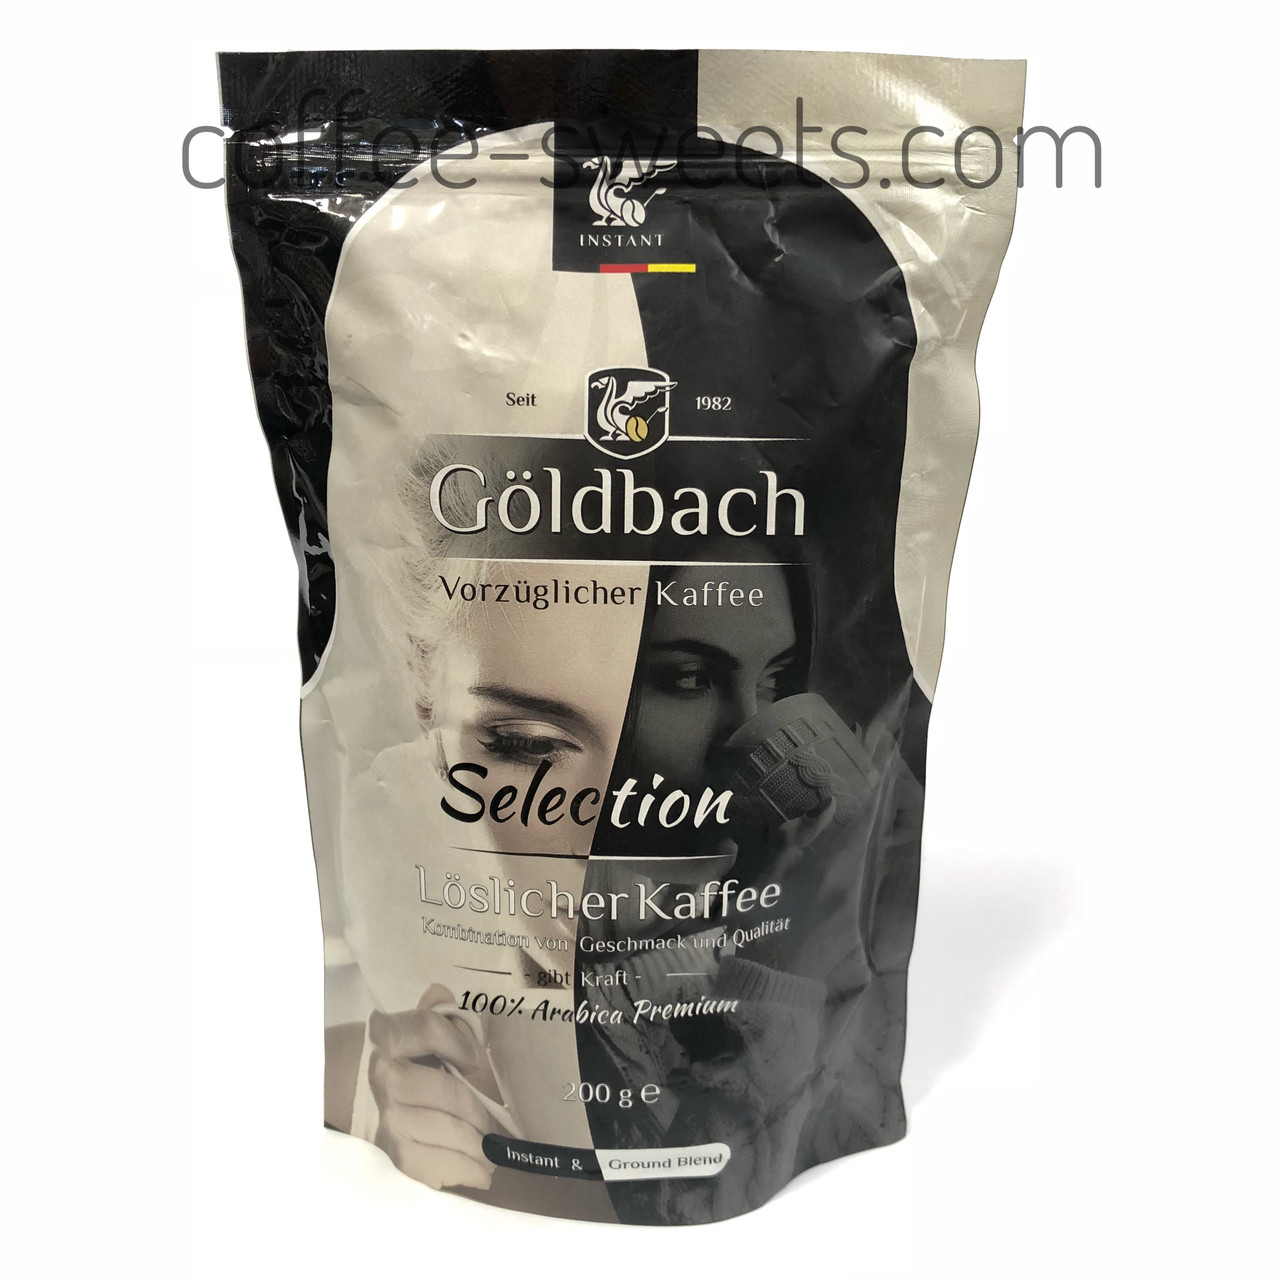 Розчинна кава Goldbach Selection 200g